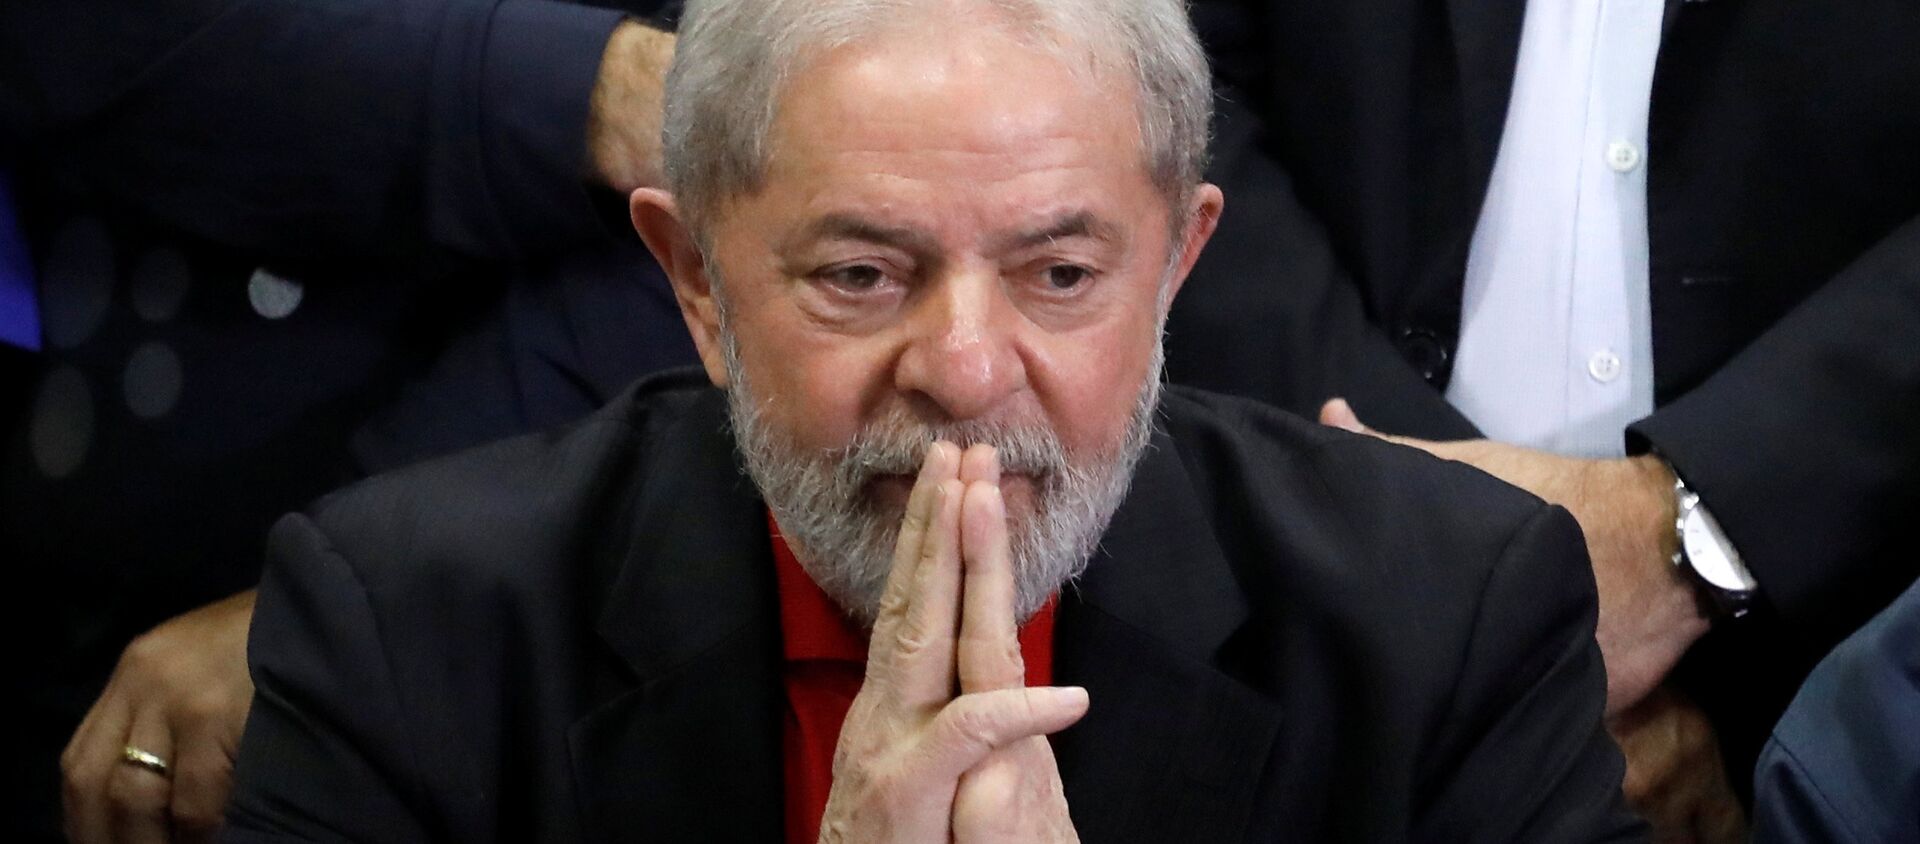 Former Brazilian President Luiz Inacio Lula da Silva - Sputnik International, 1920, 27.11.2019